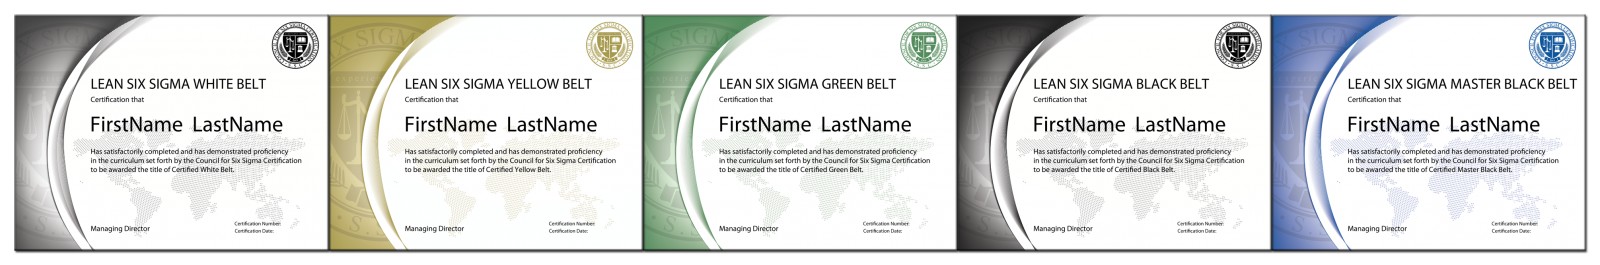 Lean Six Sigma Certifications